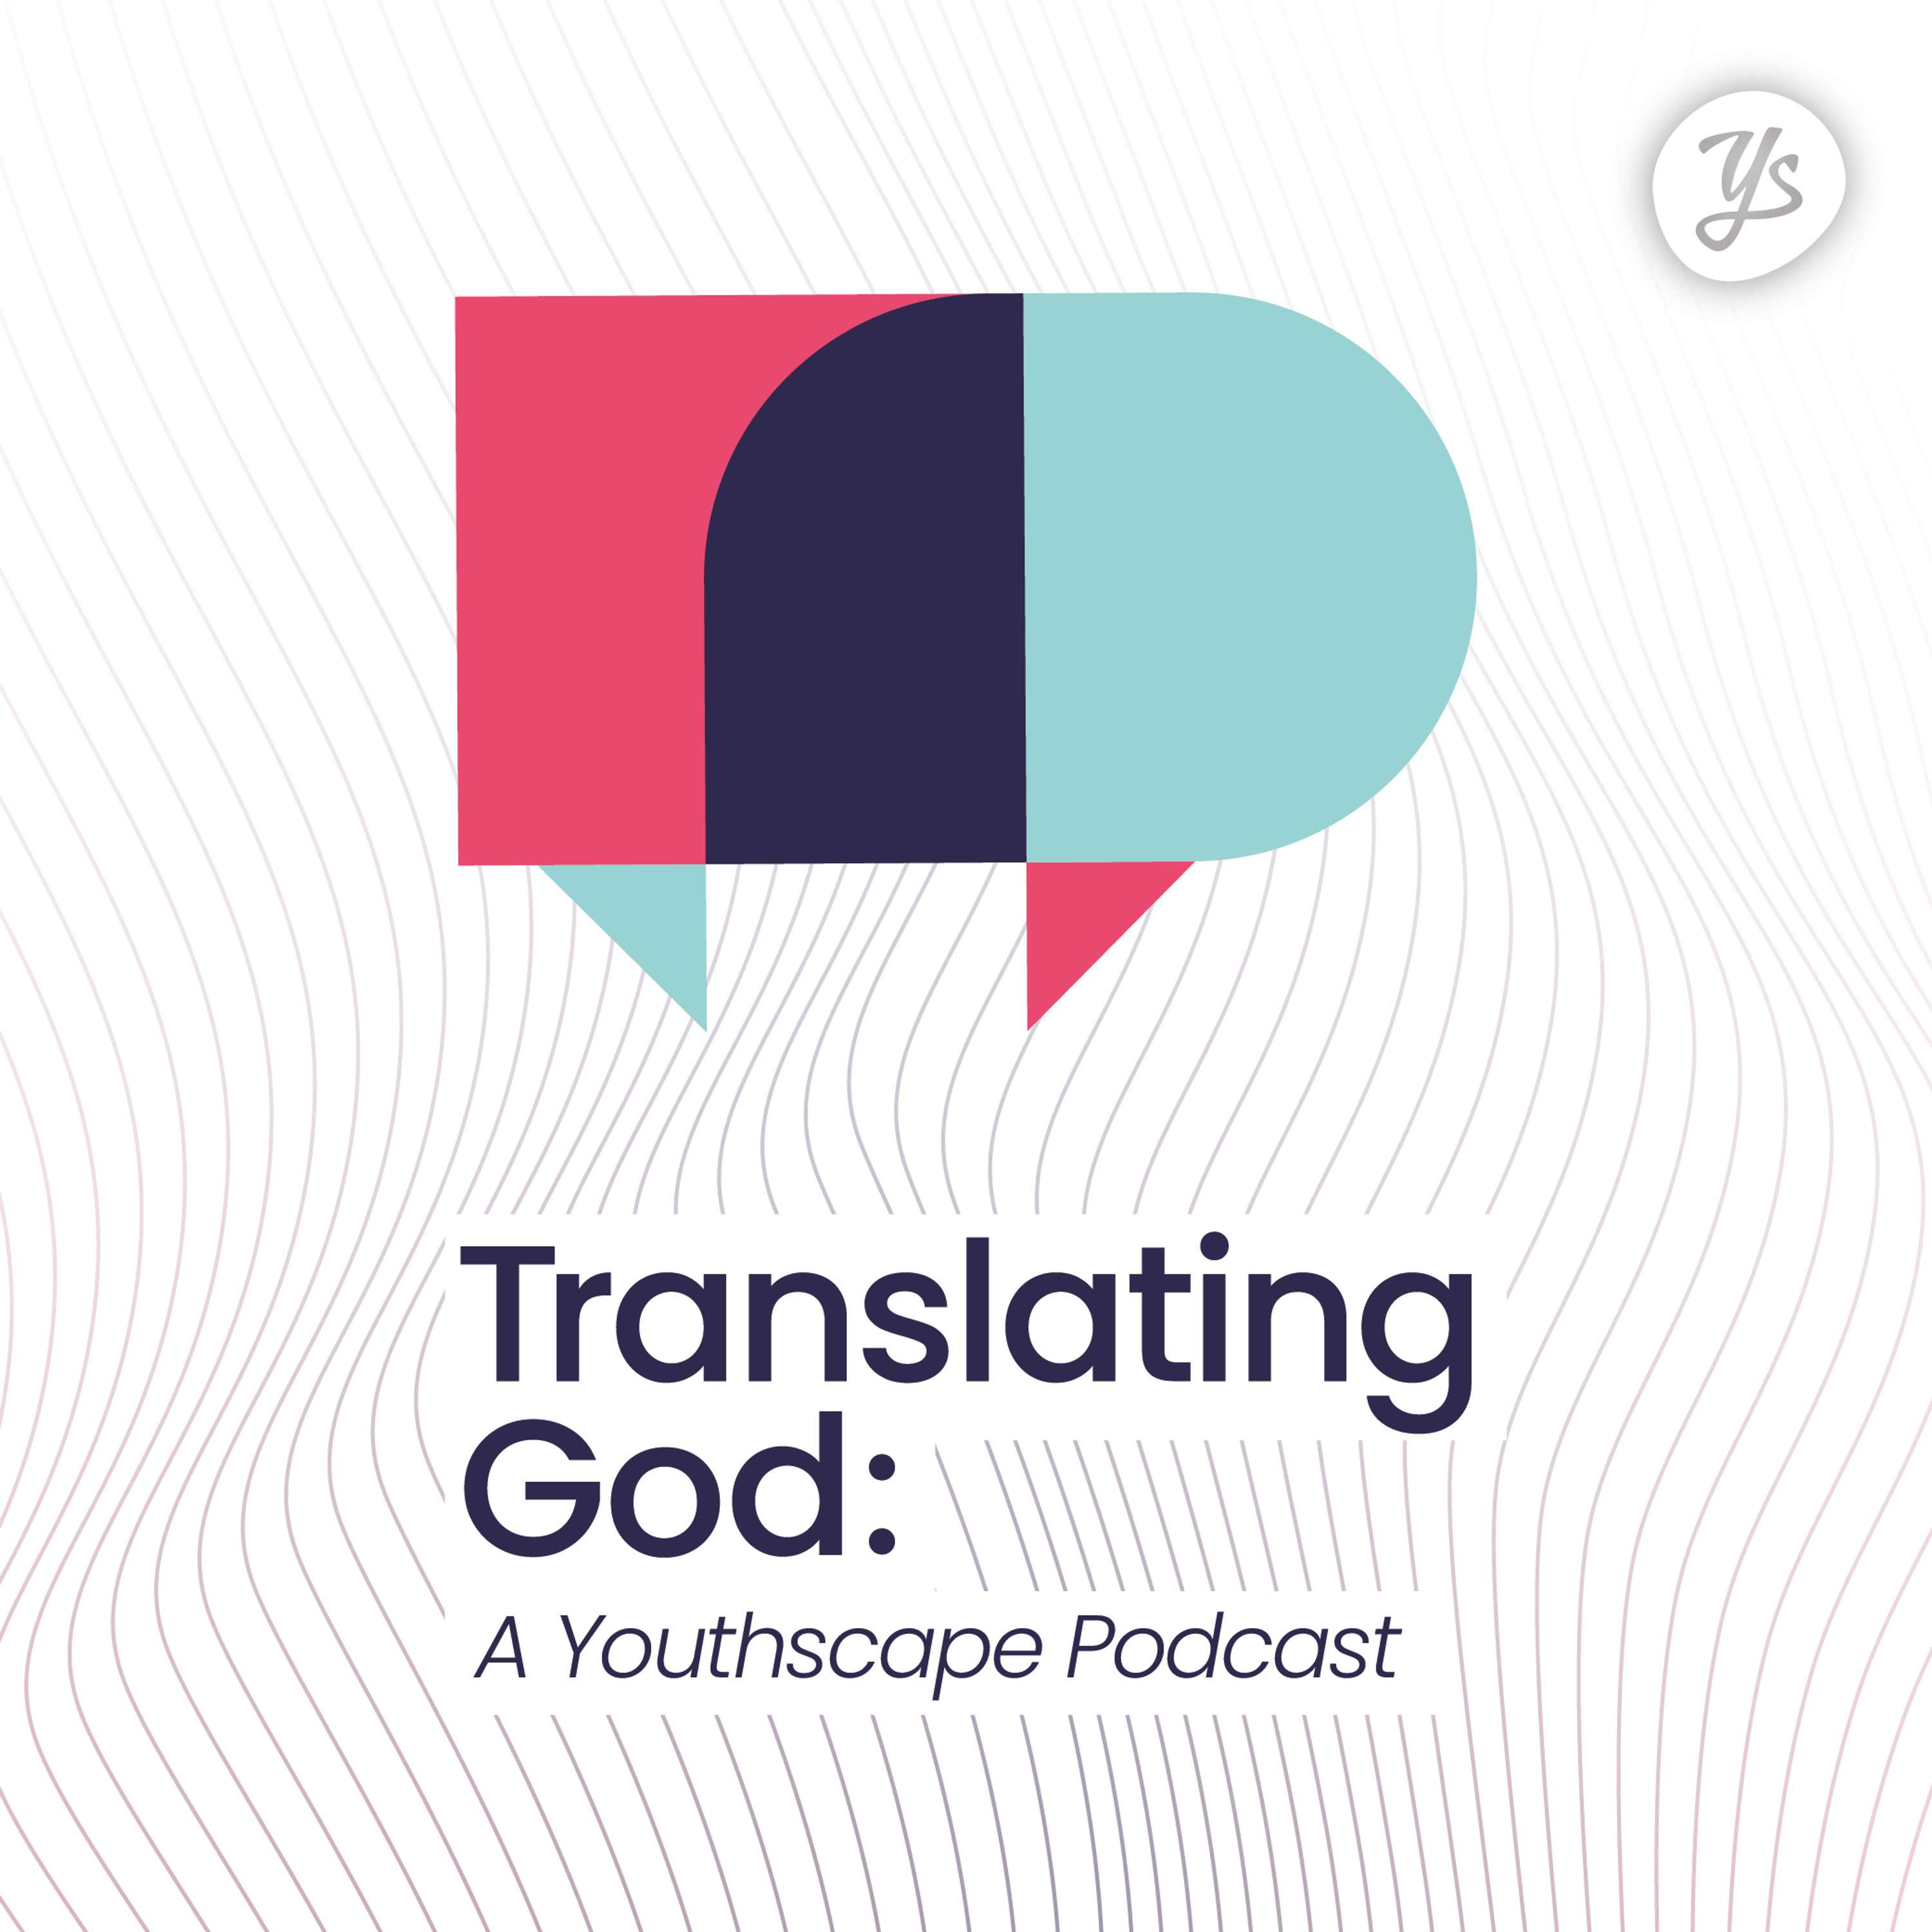 Loneliness, night time habits & romance | Episode 1 | Translating God: A Youthscape Podcast